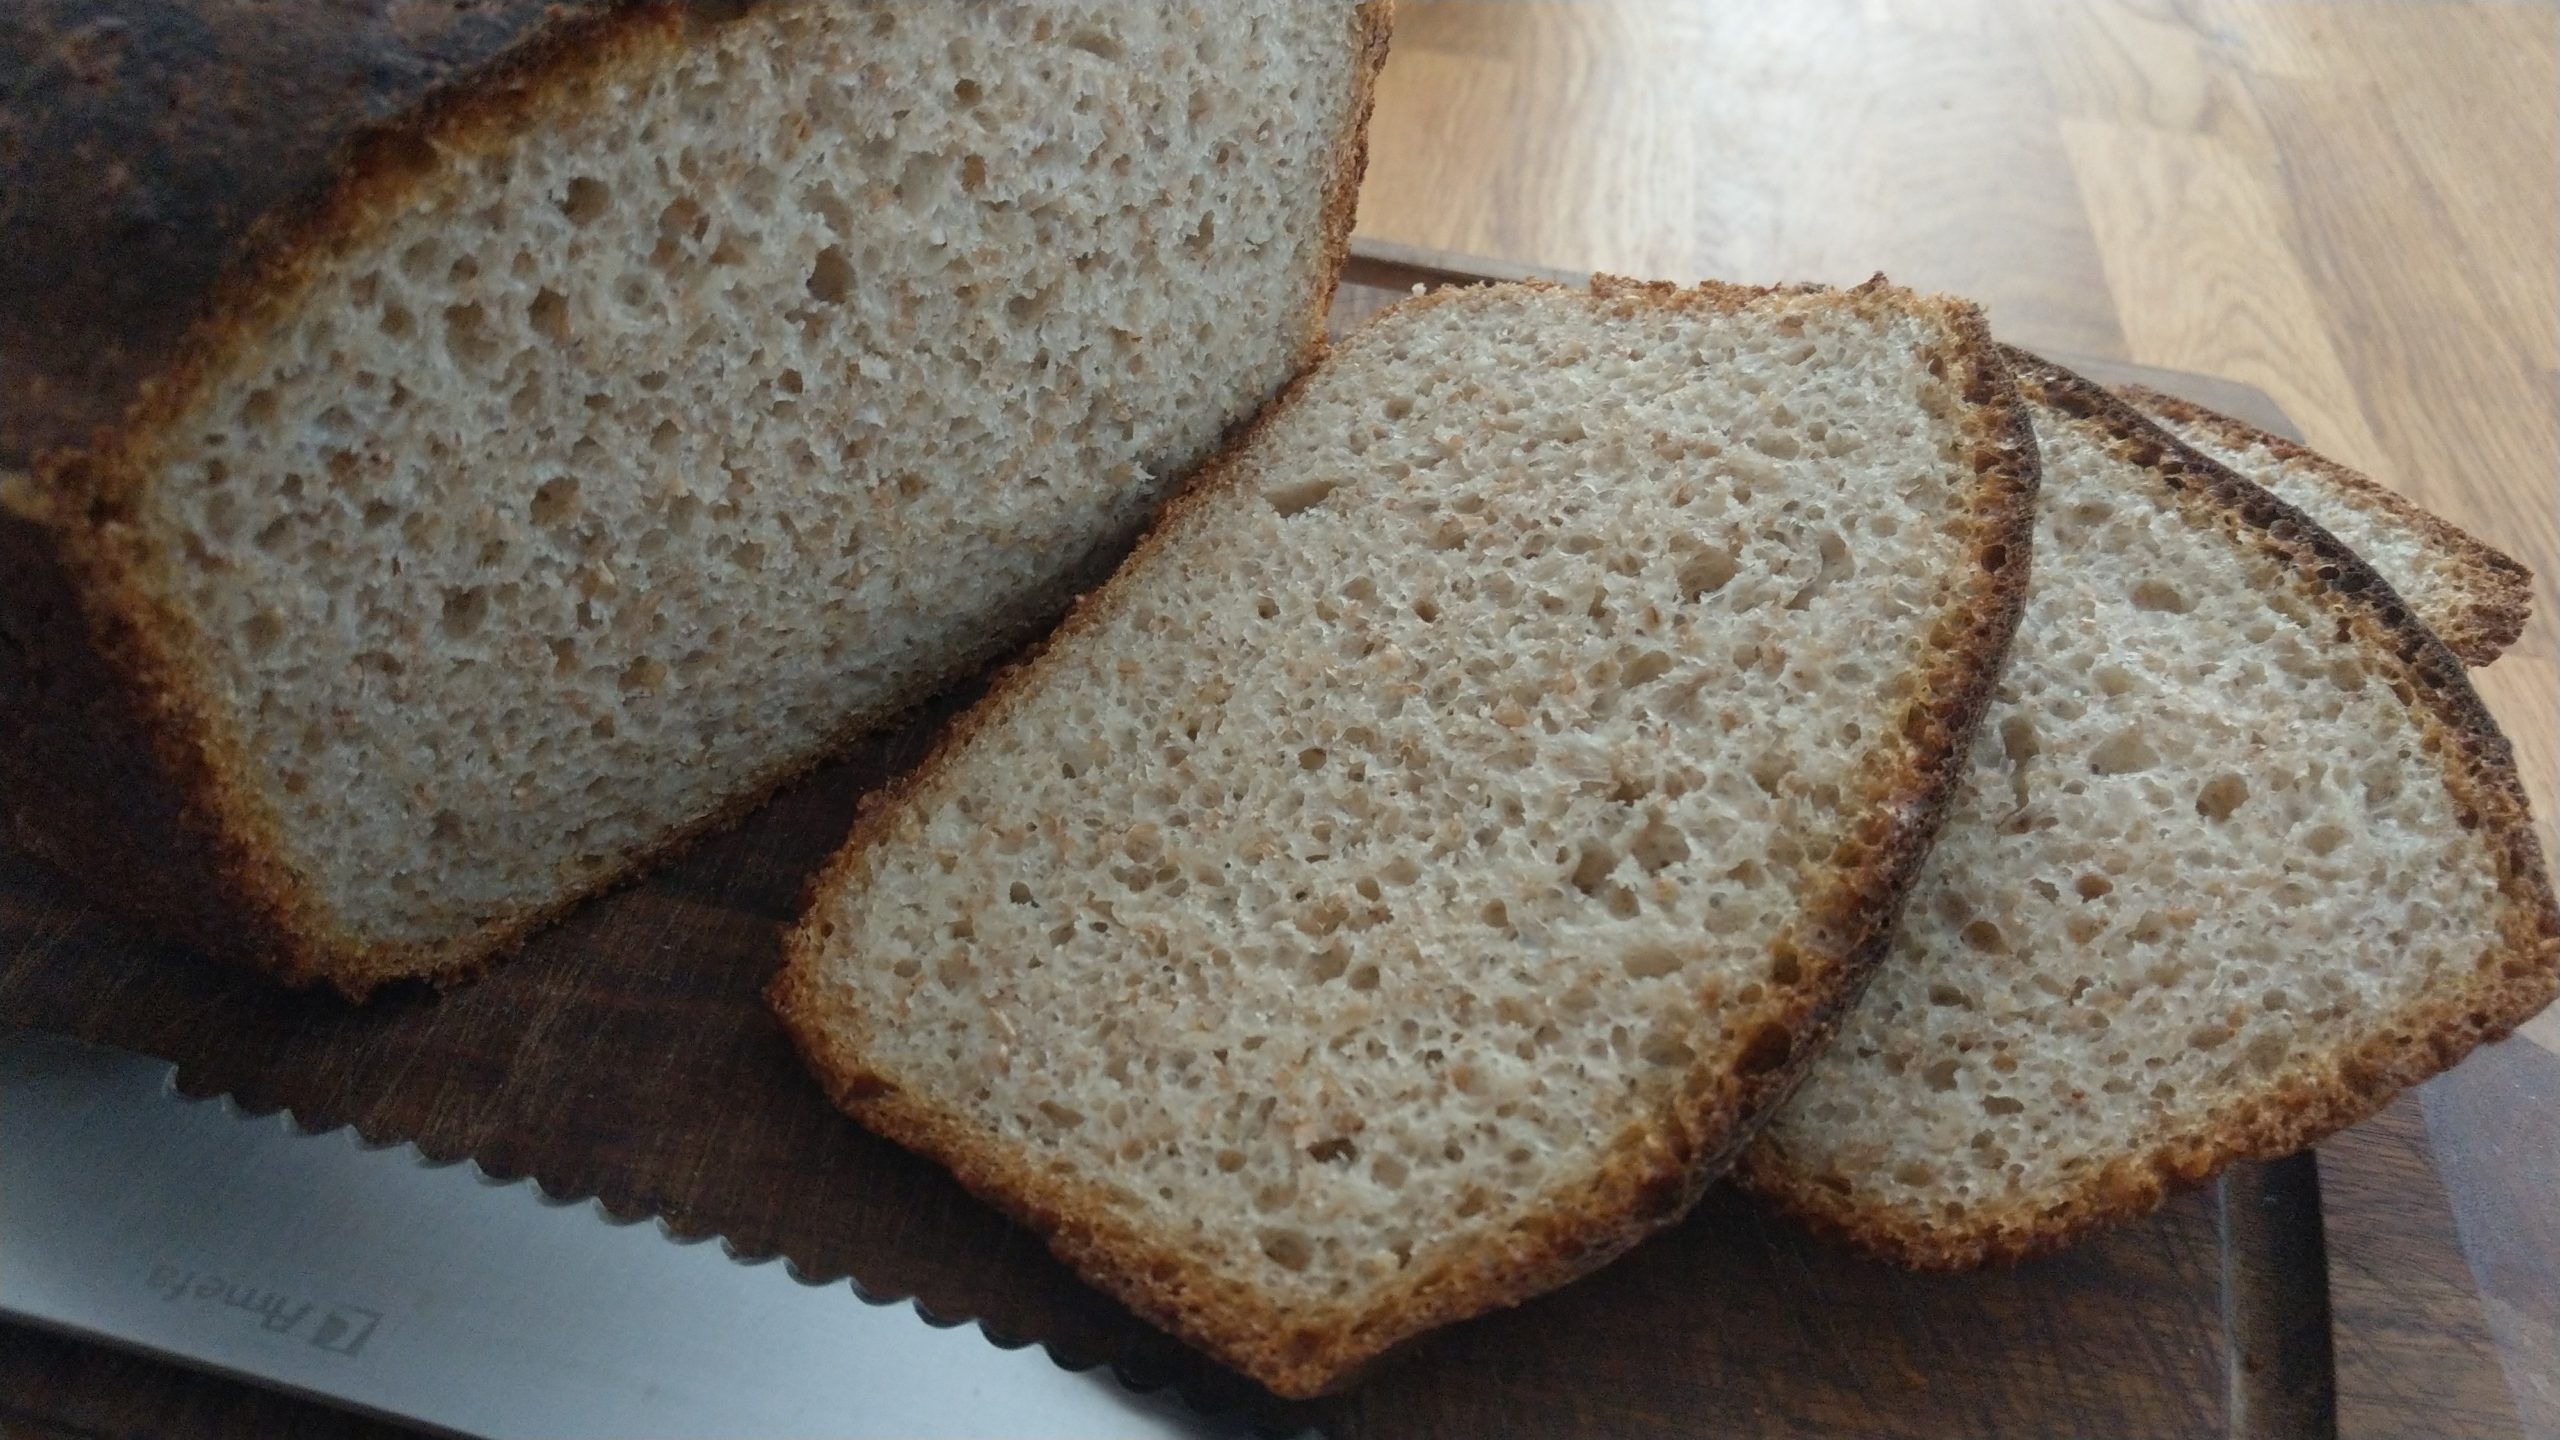 Today's bread